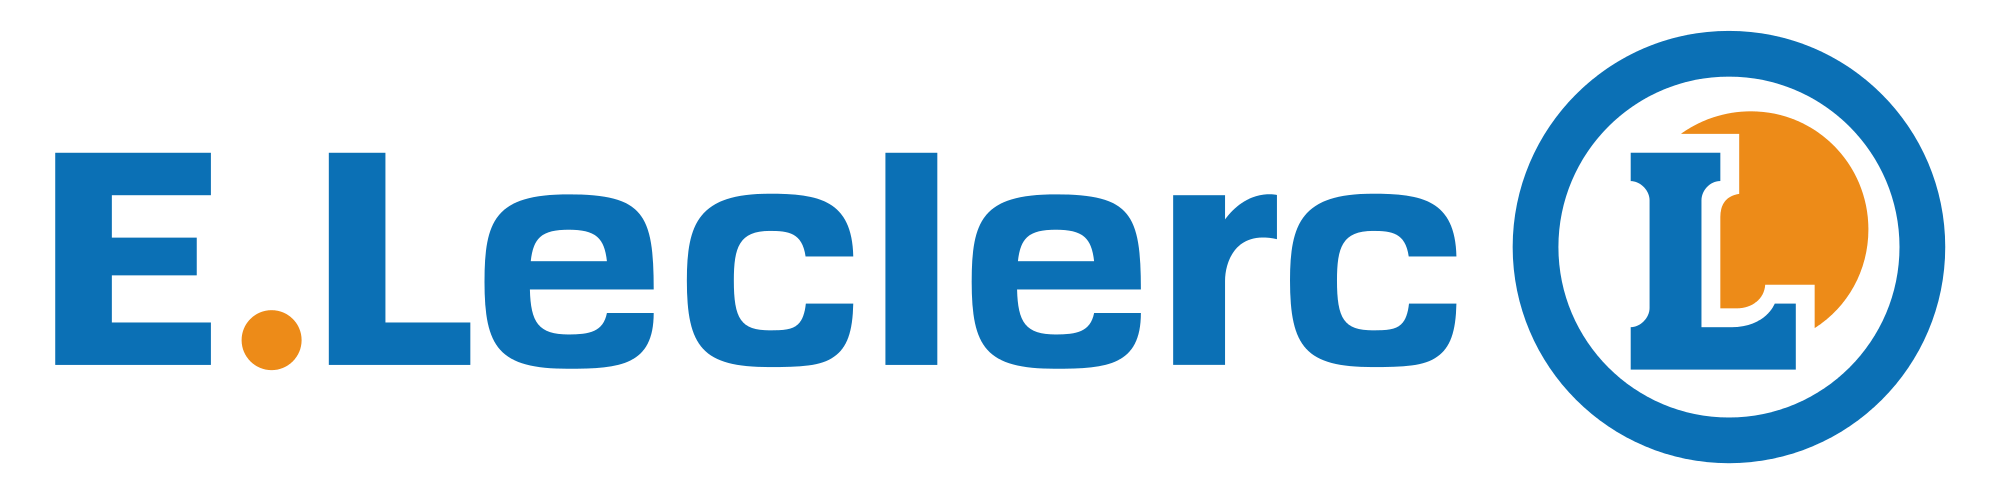 Logo Lerclerc